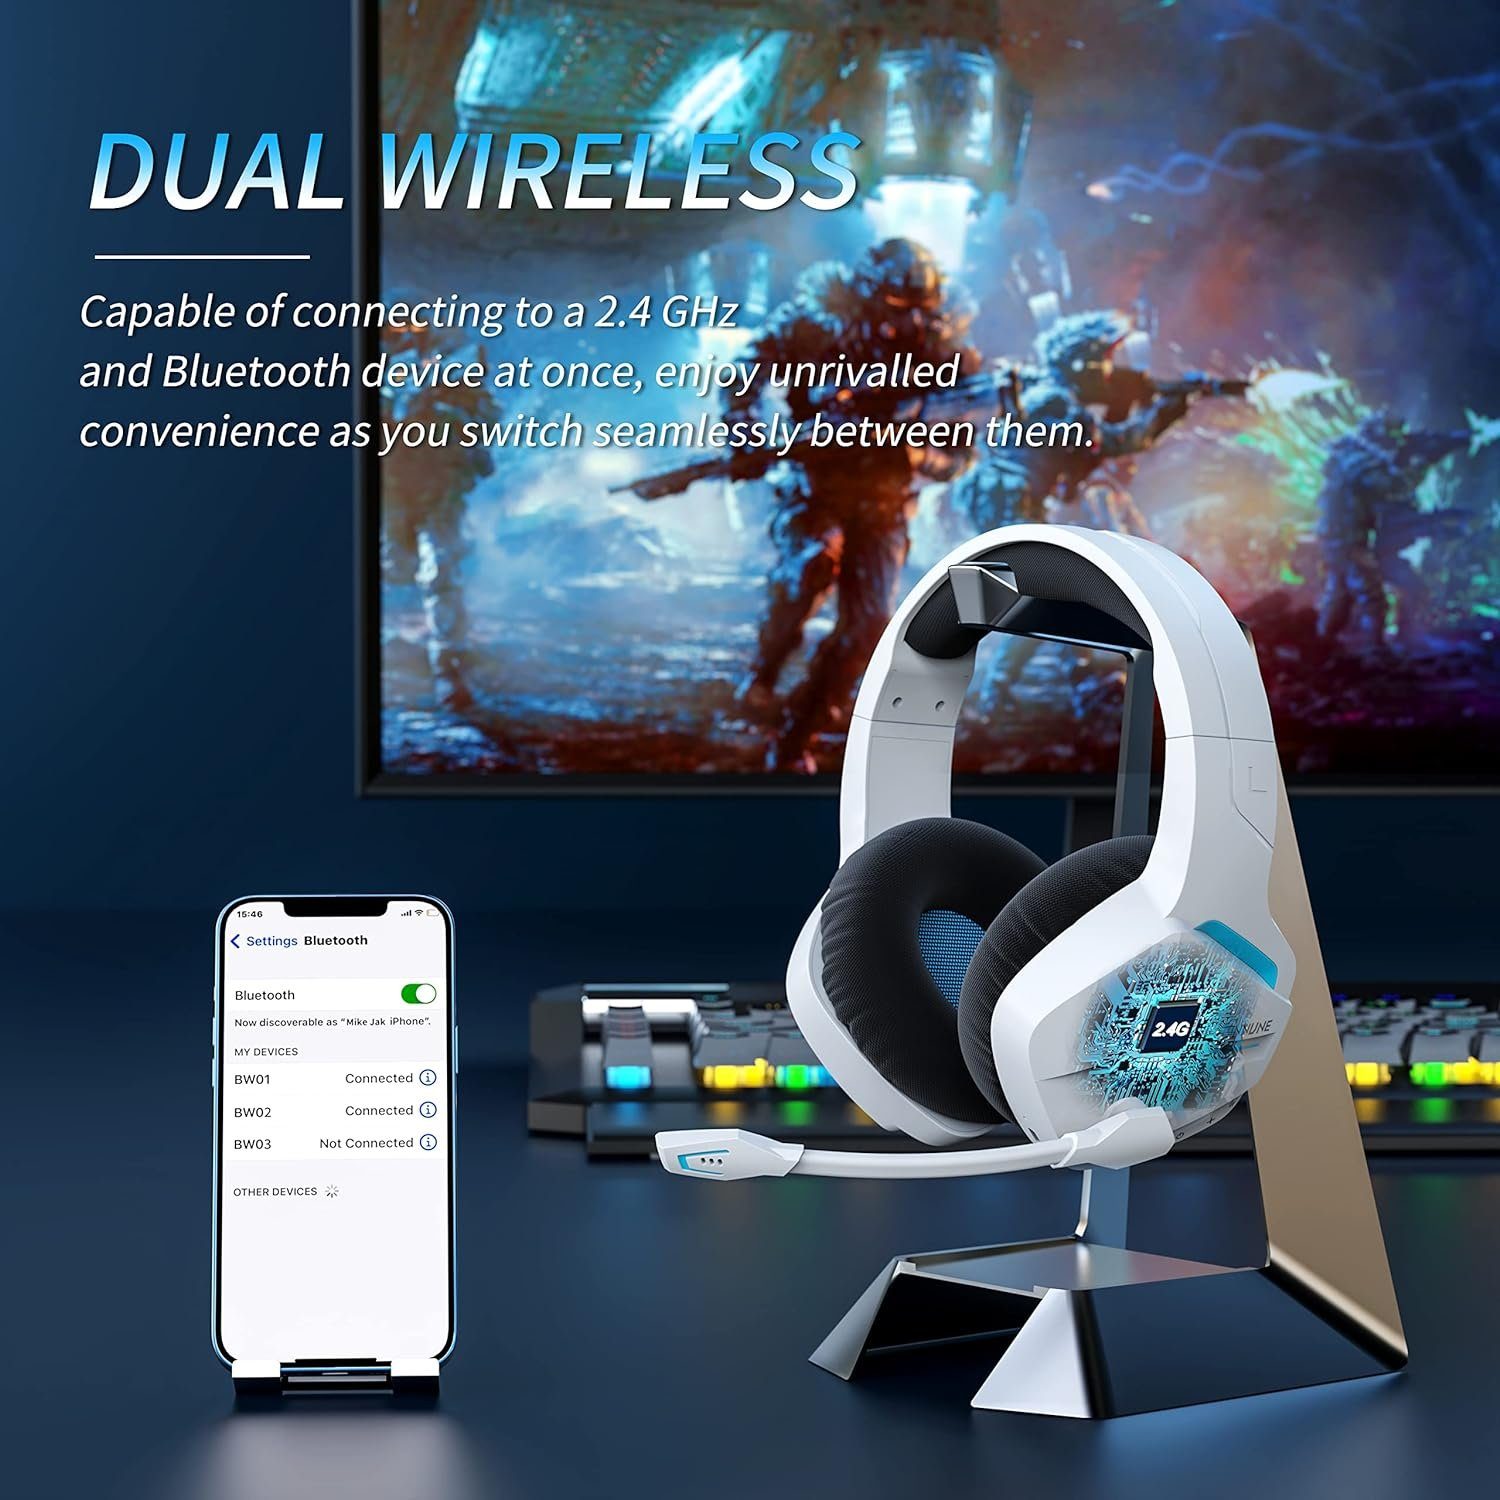 BINNUNE Cancelling Akkulaufzeit) (Professioneller Stereo mit Bluetooth, Stunden Headset 48 Noise Sound Gaming-Headset Gaming-Sound,